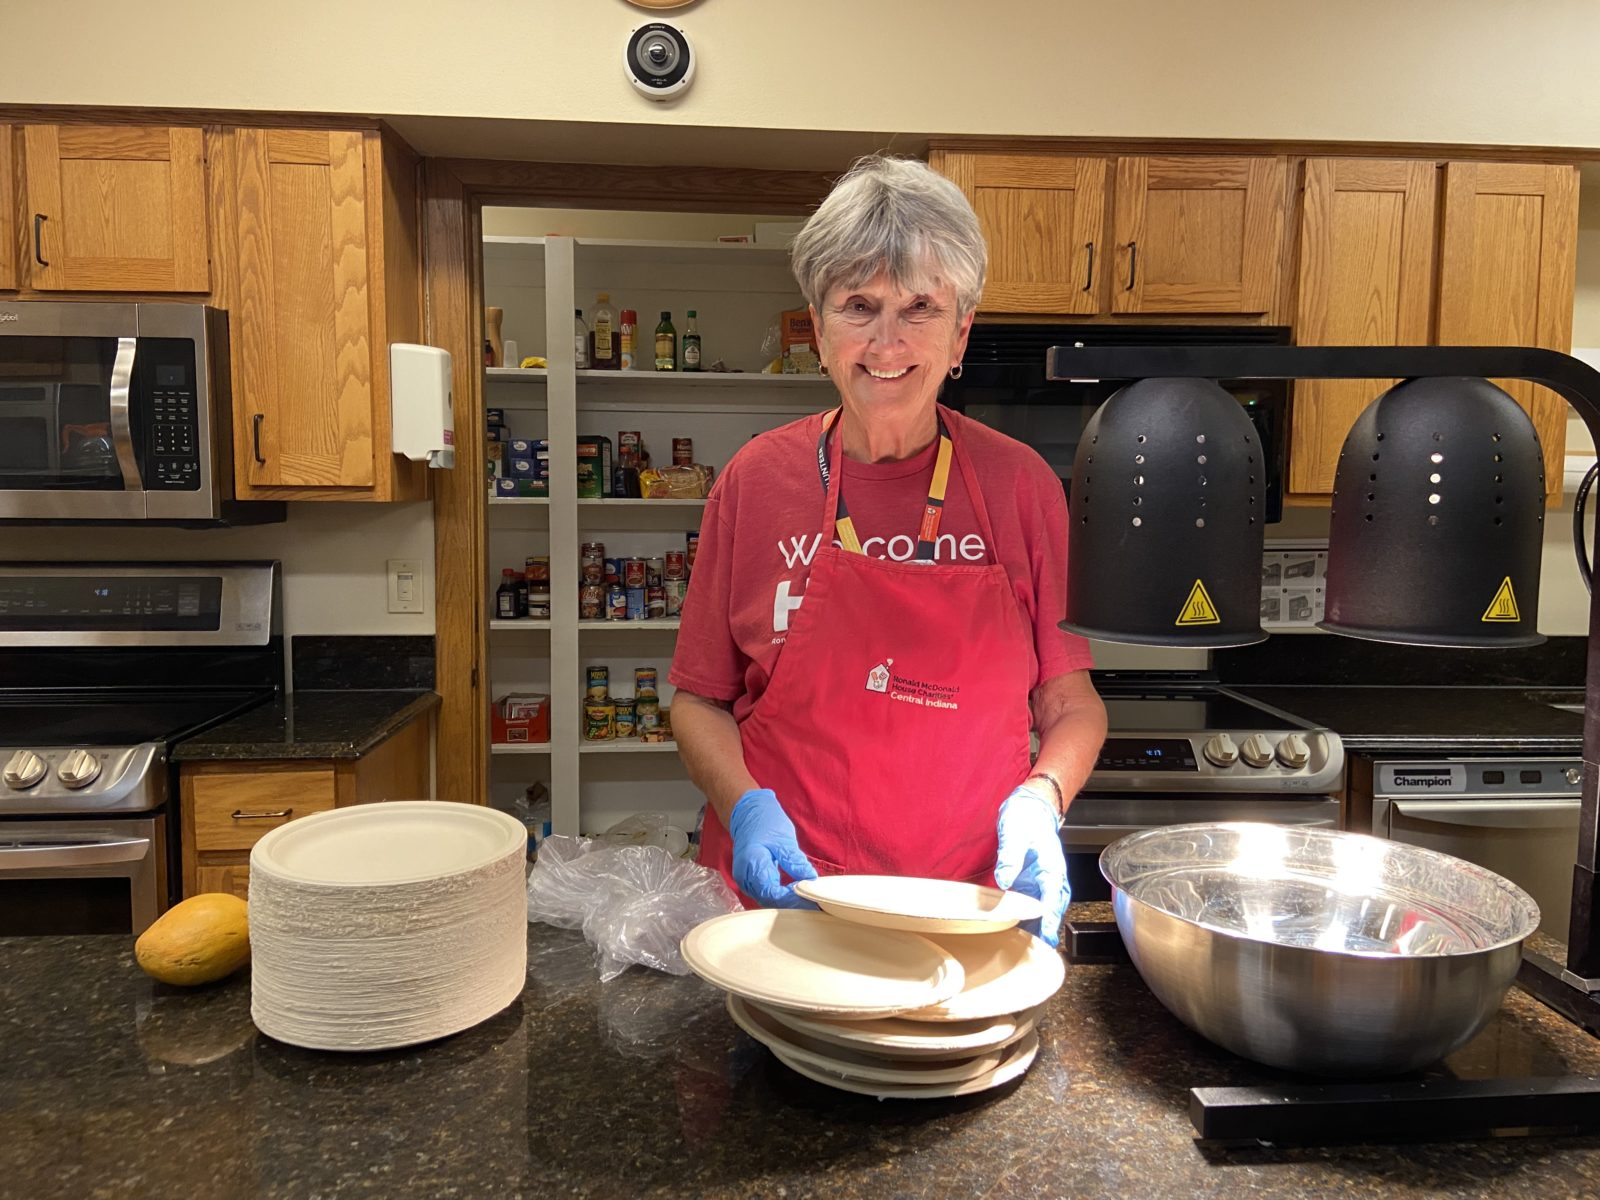 Marsha prepares a meal as a culinary crew volunteer.